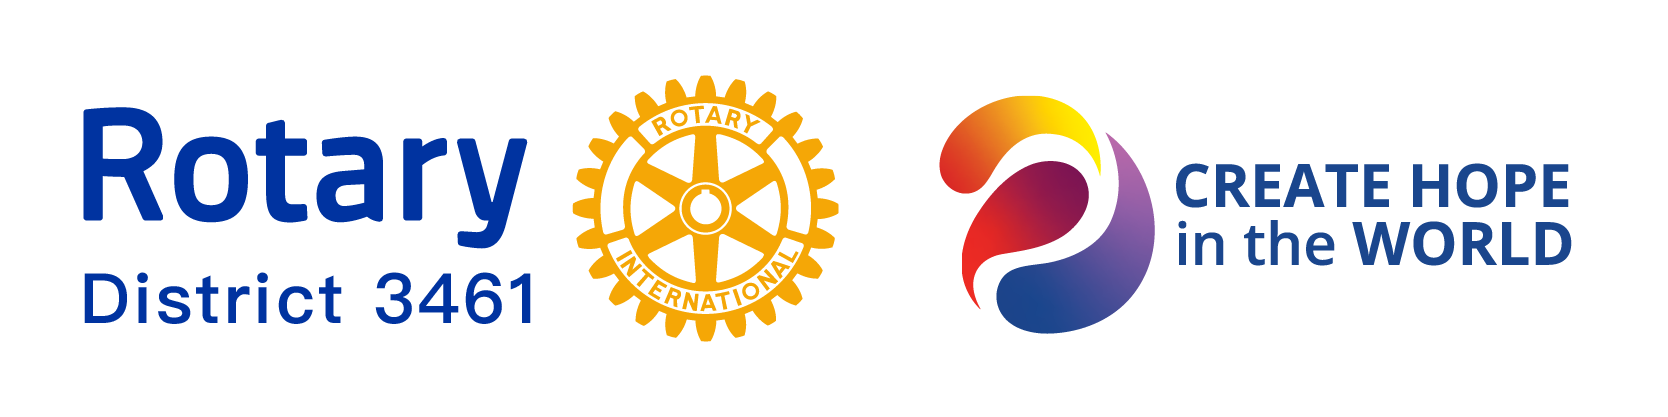 Rotary國際扶輪3461